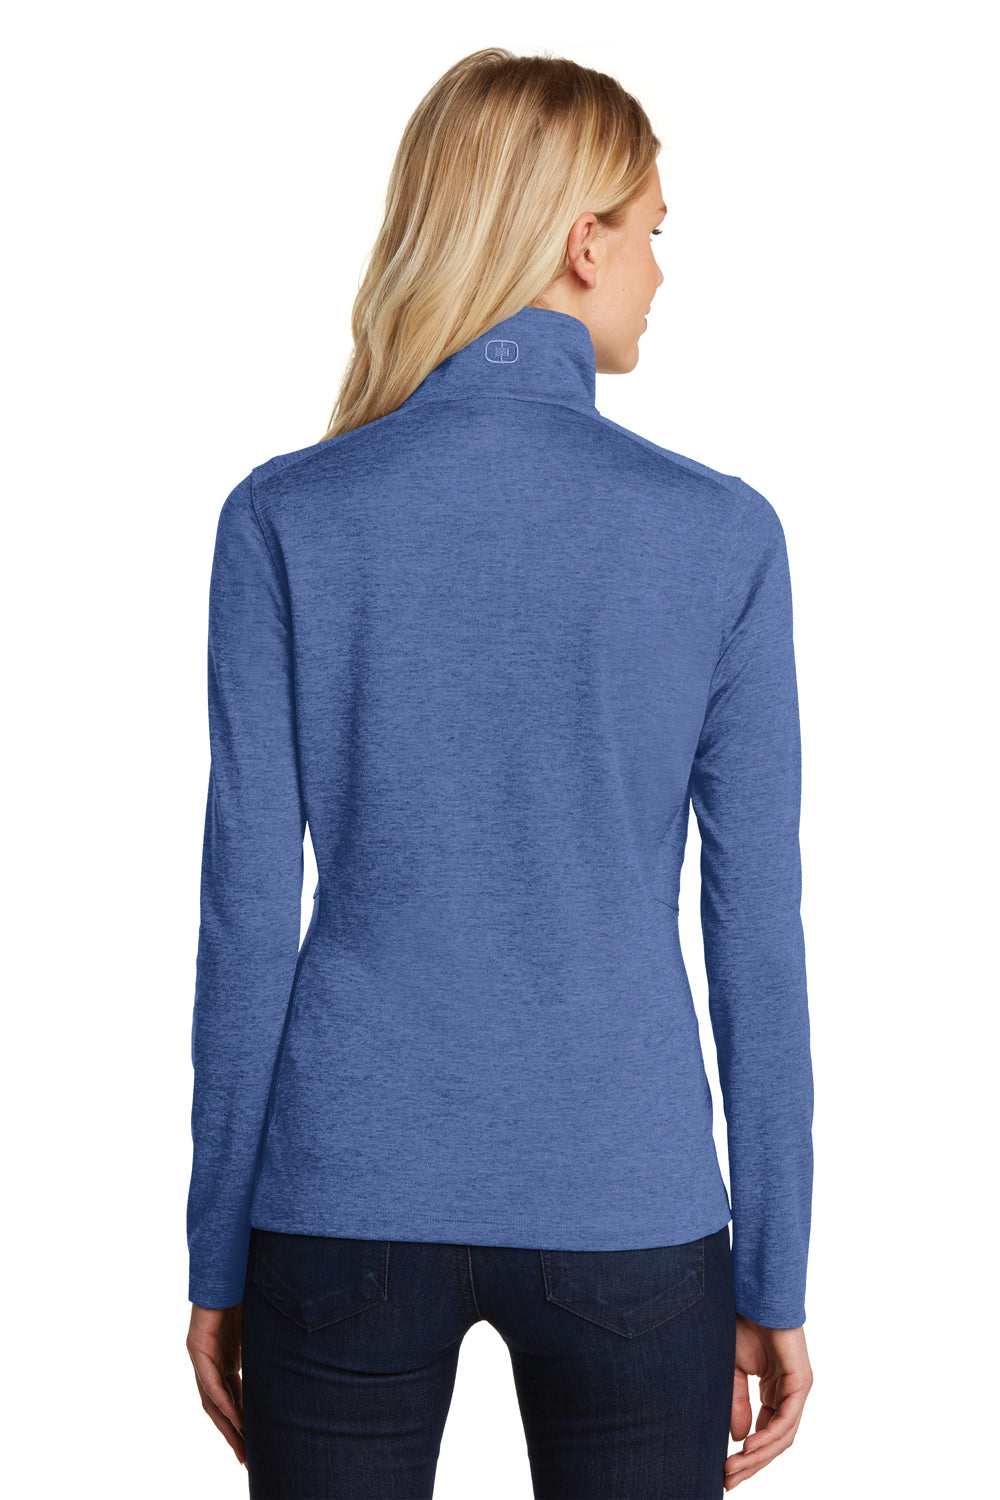 Ogio LOG203 Womens Pixel Moisture Wicking Full Zip Sweatshirt Blue Back